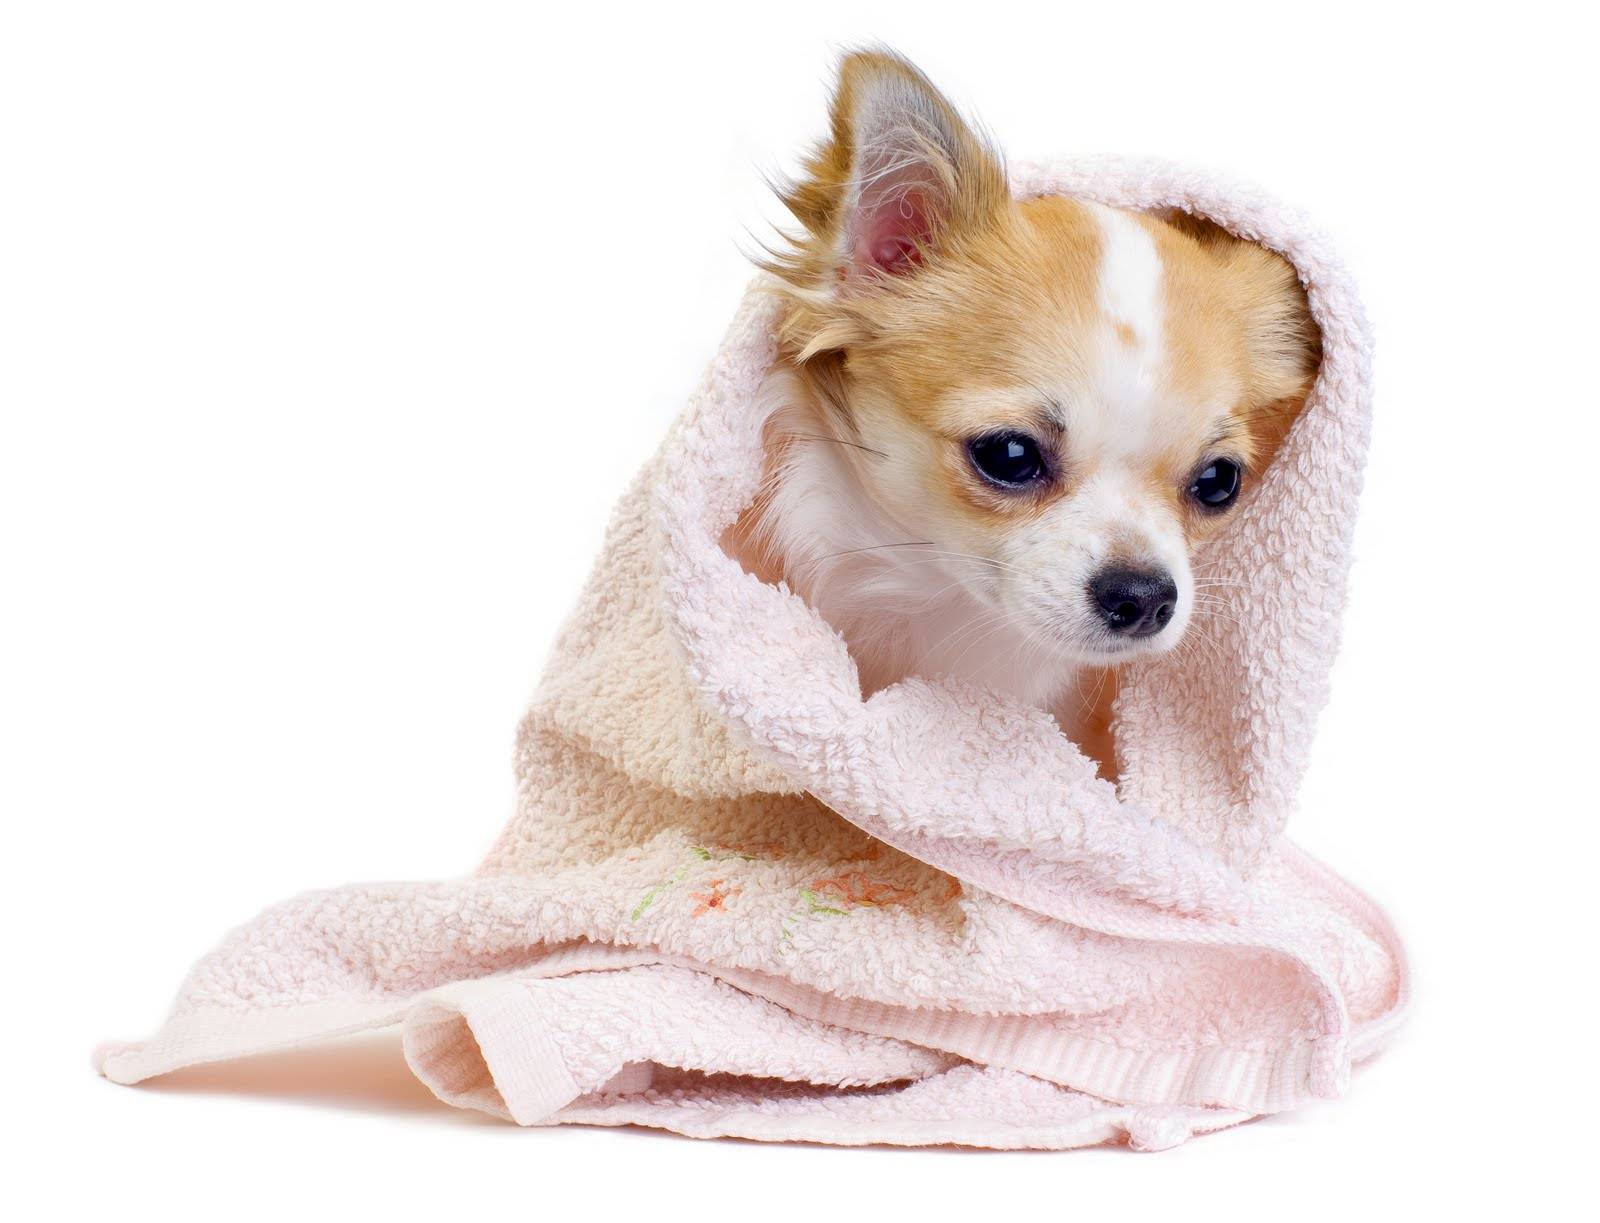 Chihuahua Puppies Wallpaper Desktop